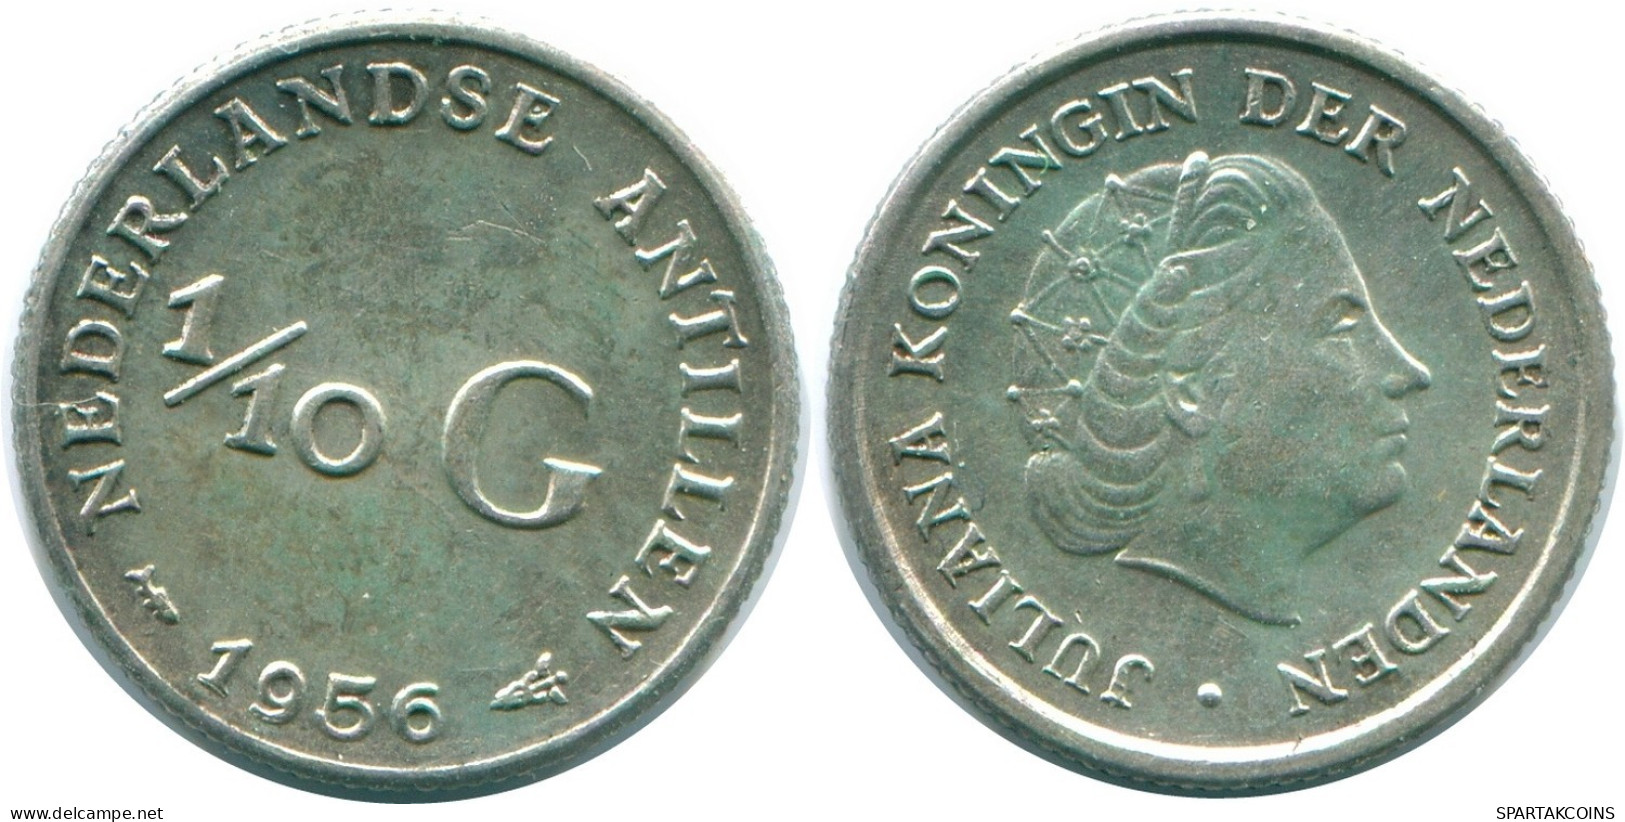 1/10 GULDEN 1956 NETHERLANDS ANTILLES SILVER Colonial Coin #NL12092.3.U.A - Netherlands Antilles